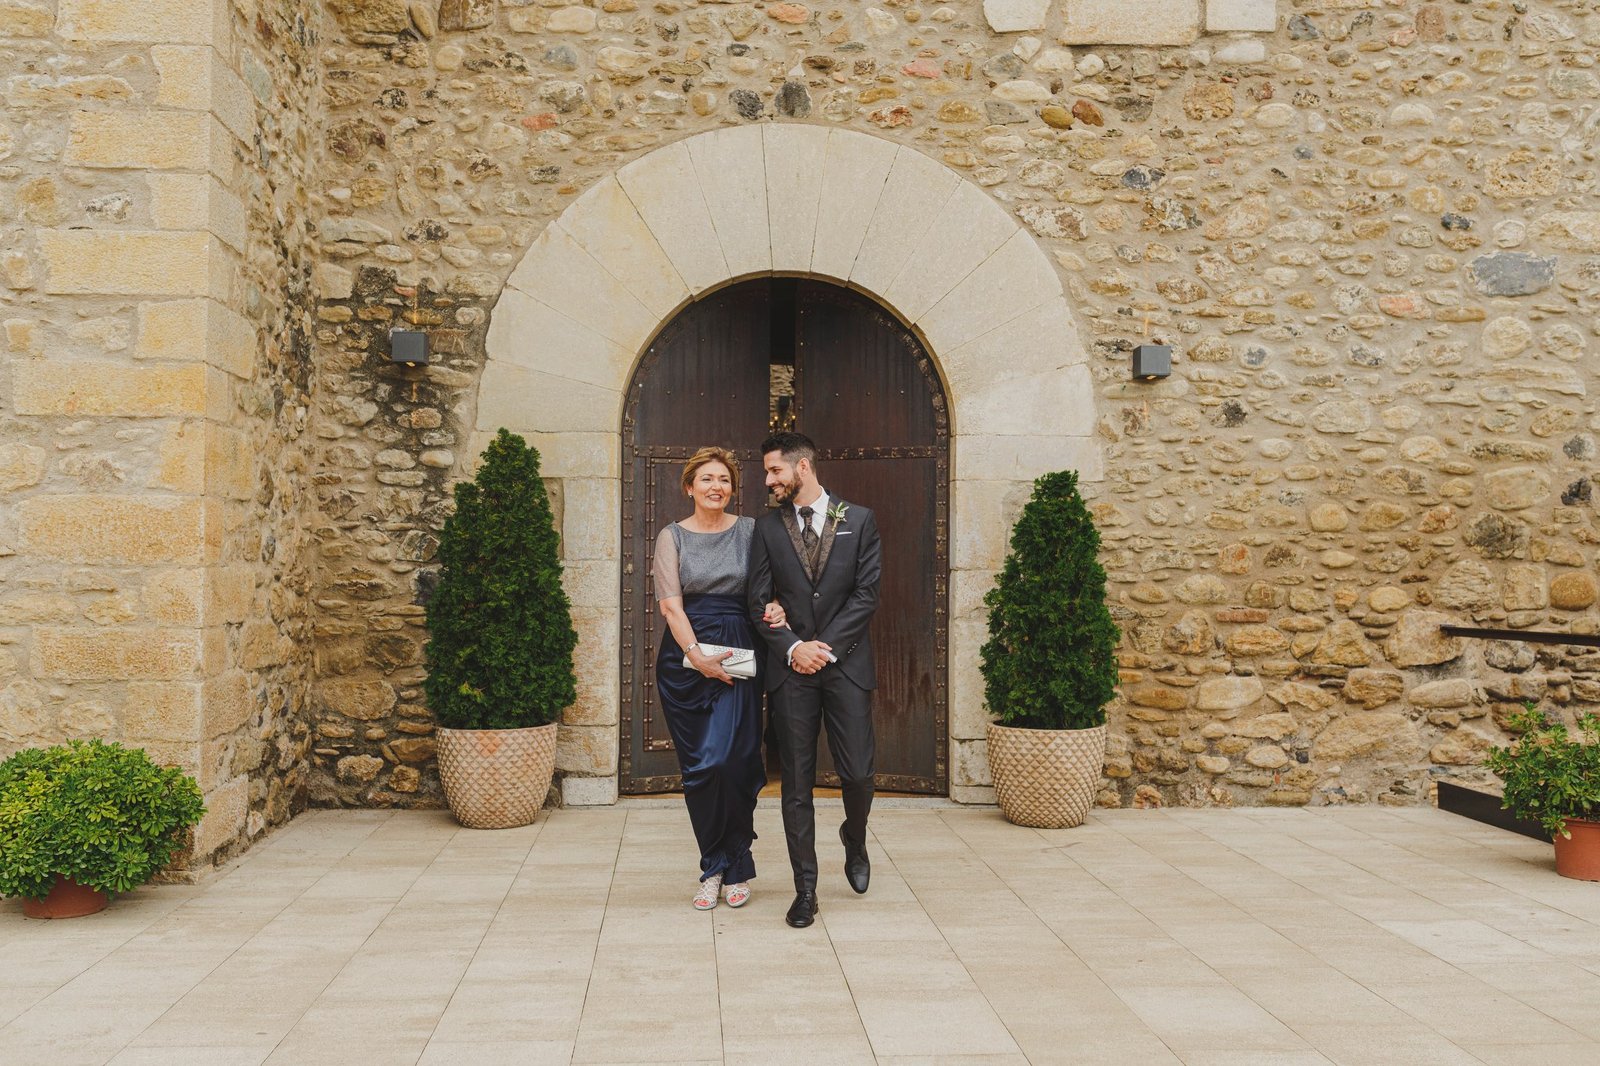 weddings in Girona and Costa Brava. Original couples photography